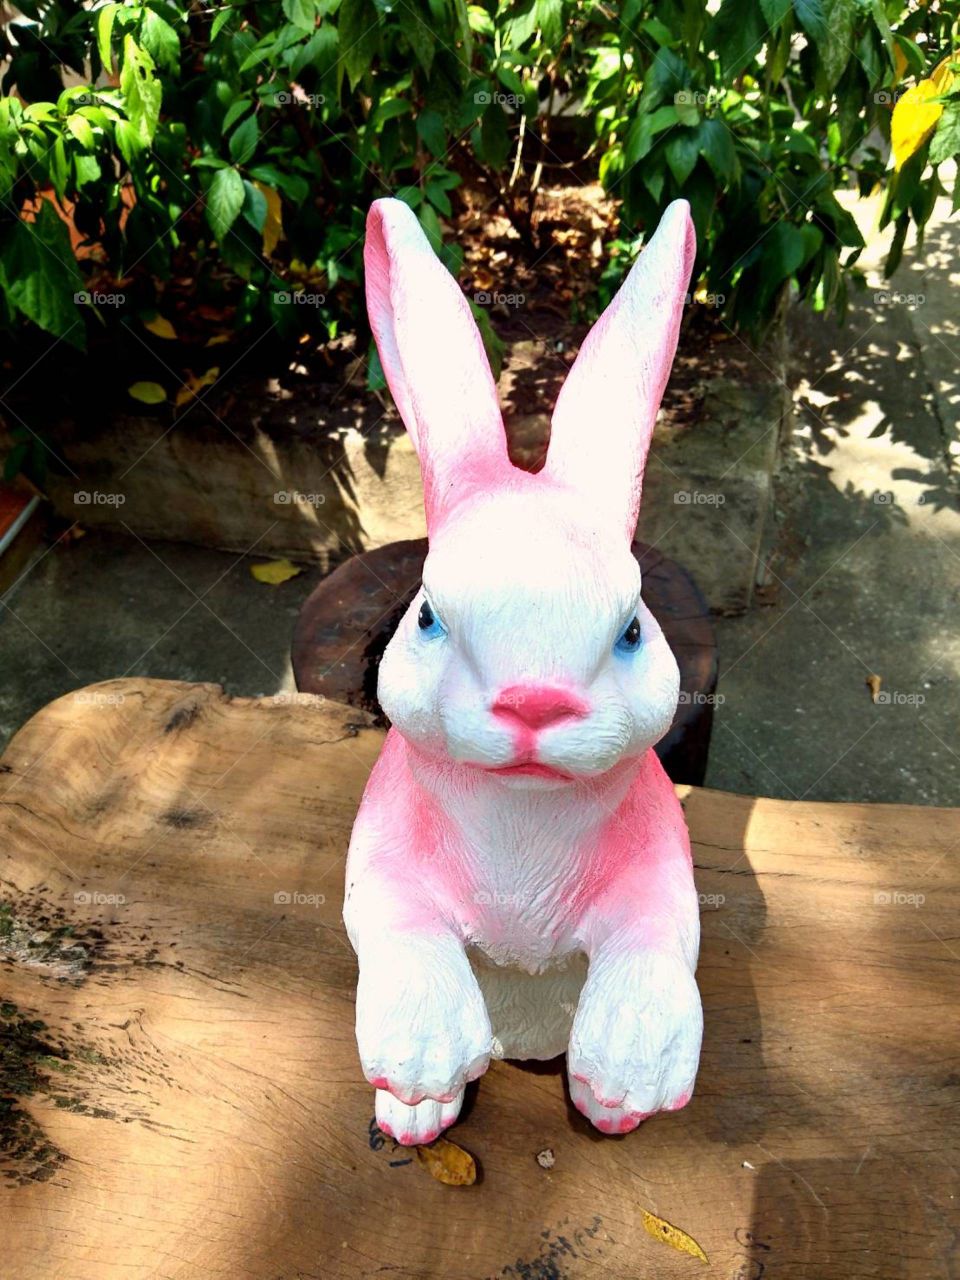 Cute rabbit statue in the garfen.